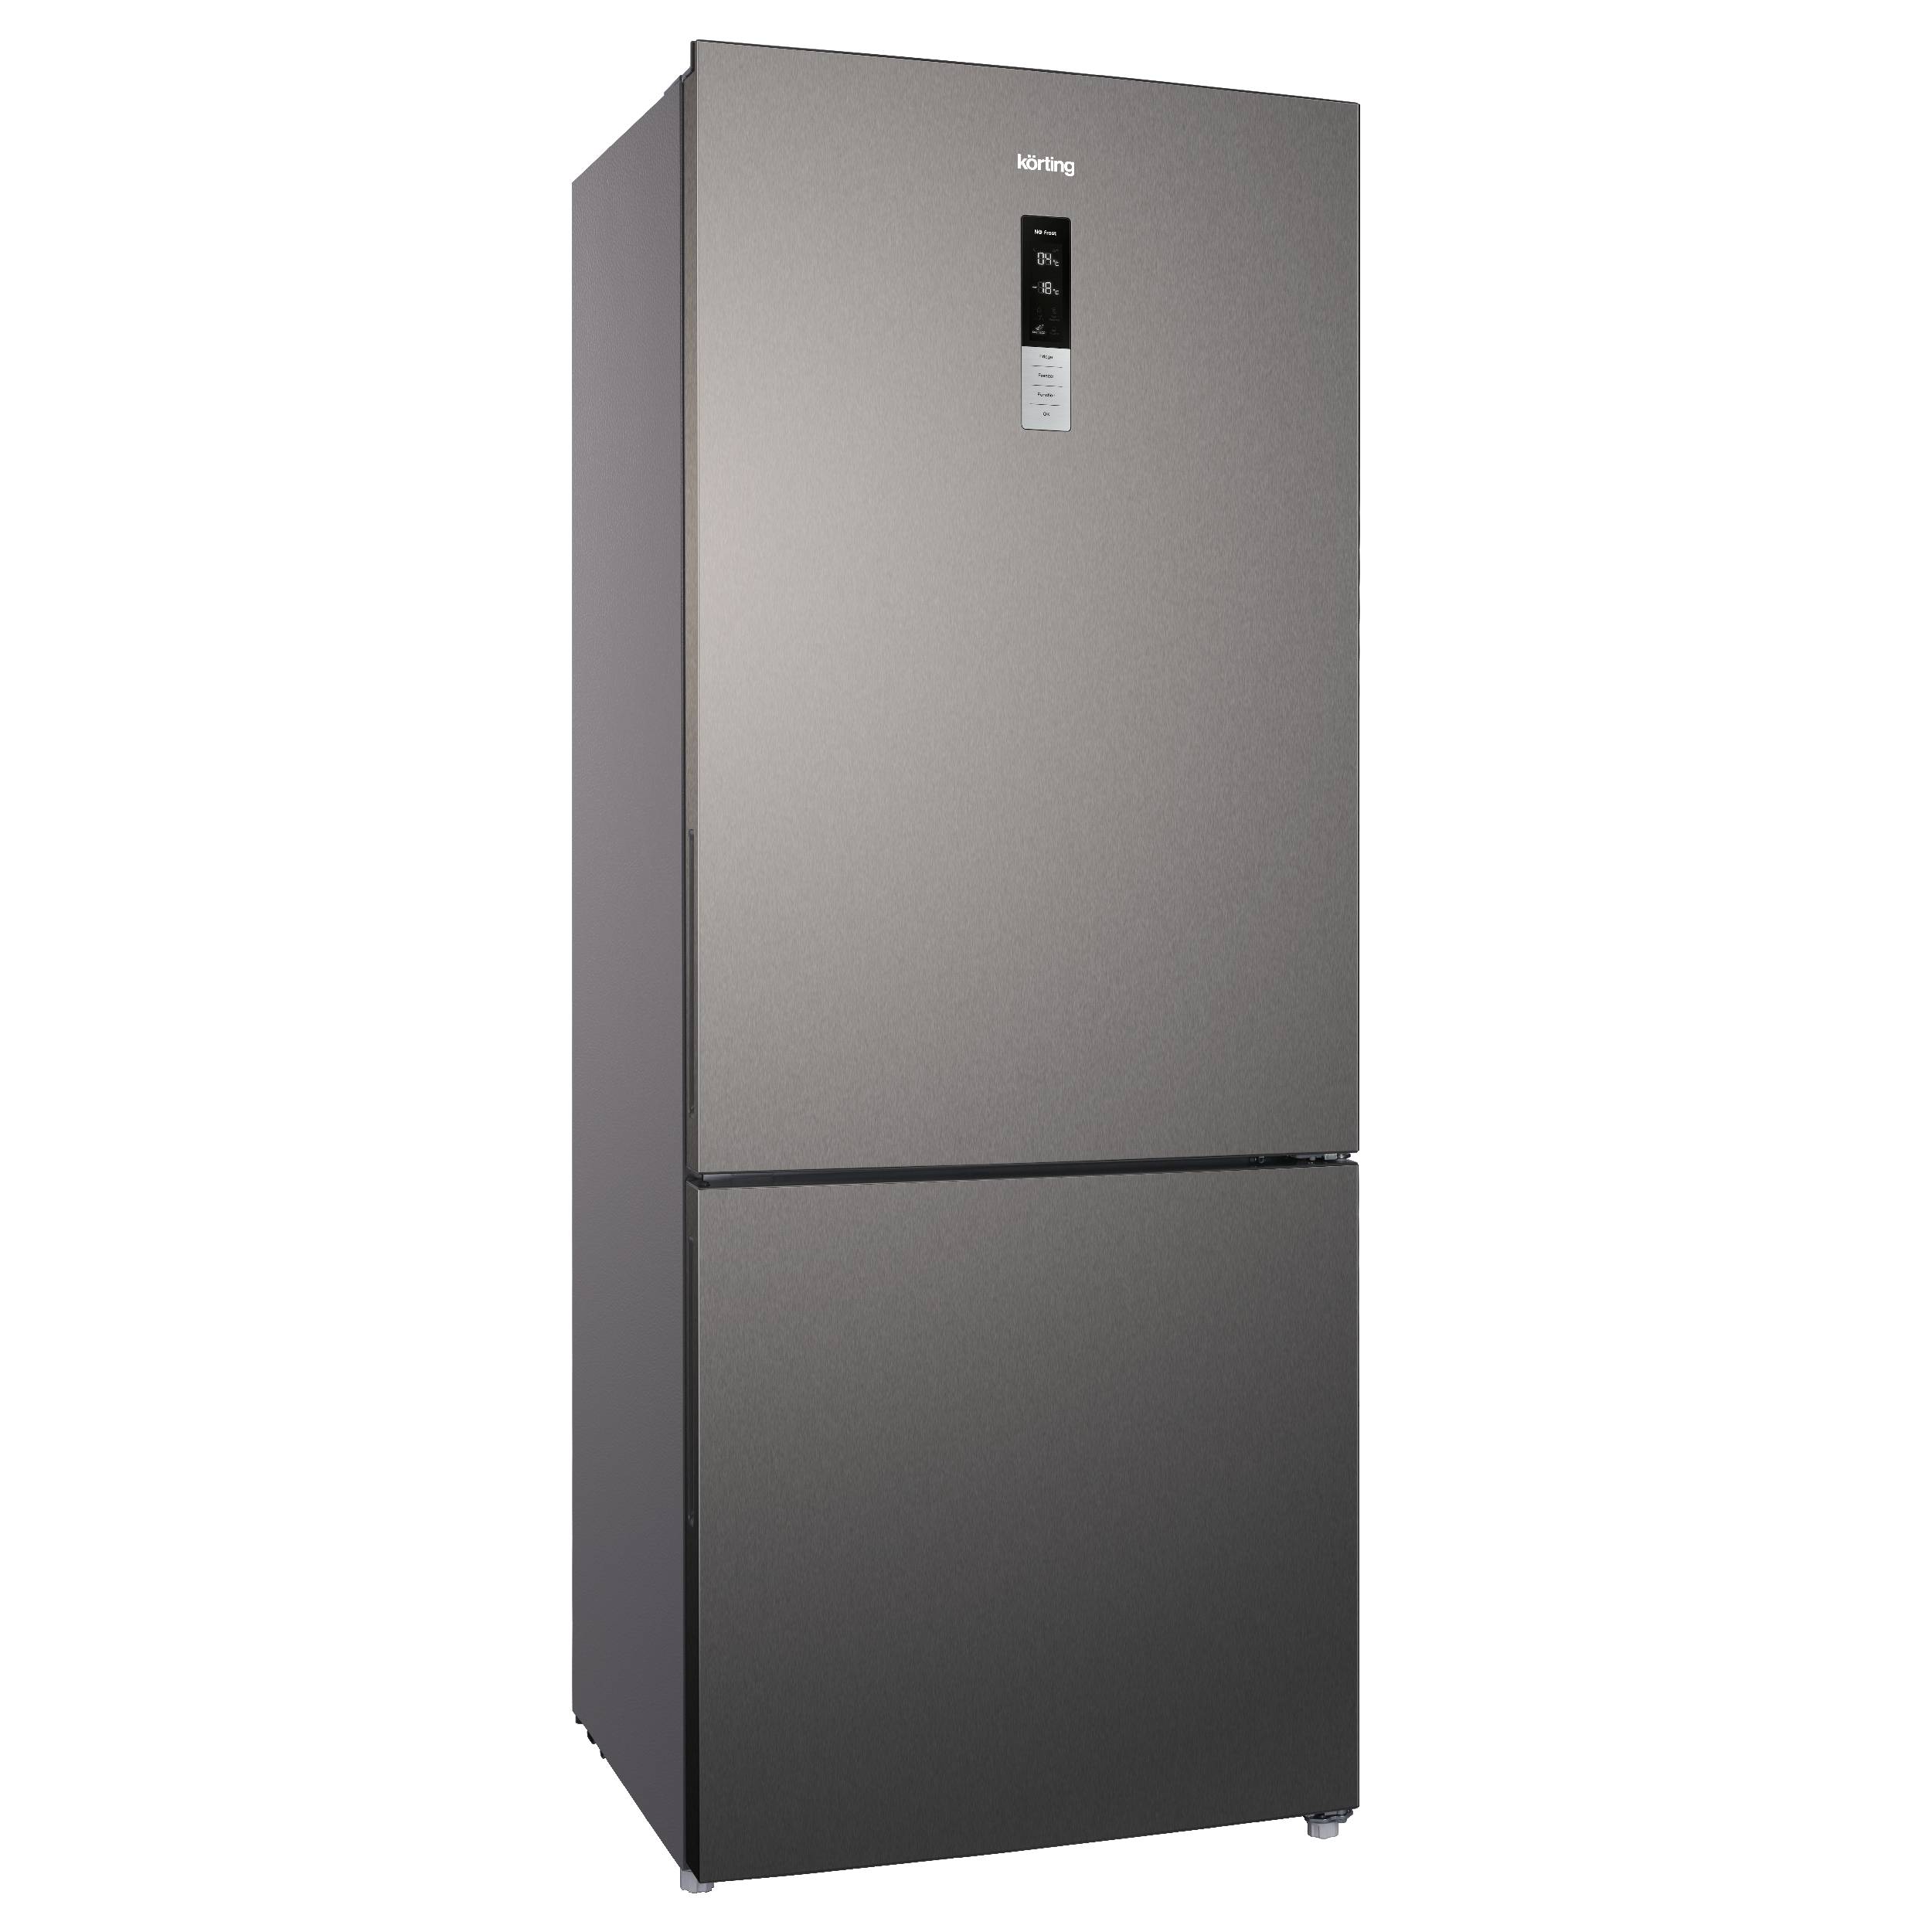 Холодильник Korting KNFC 72337 X серебристый, серый холодильник korting knfc 72337 x серебристый серый